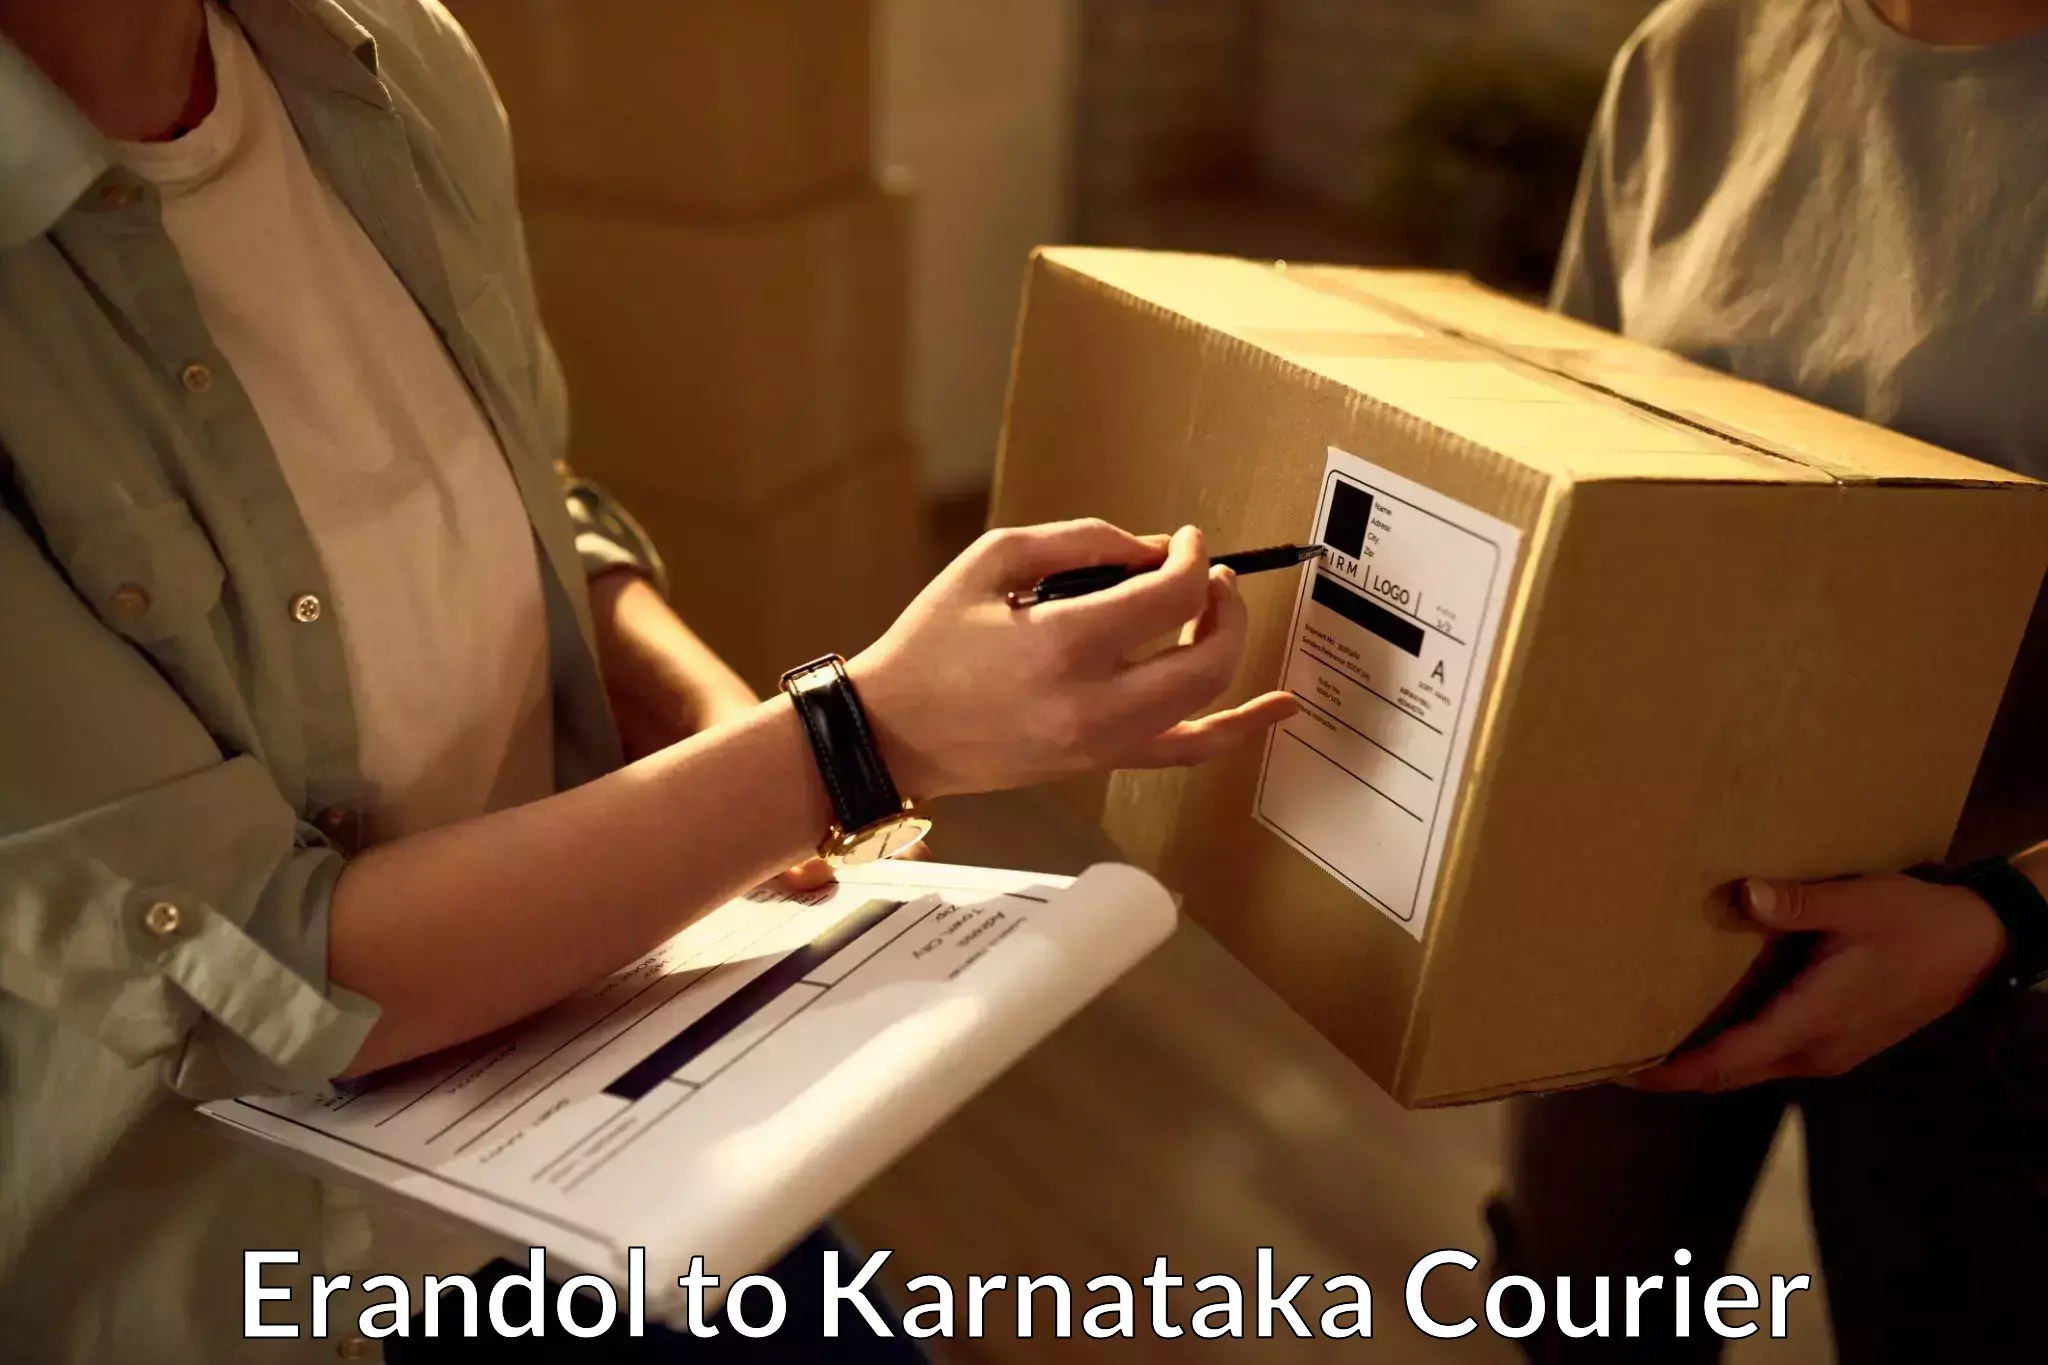 Express logistics service Erandol to Karnataka